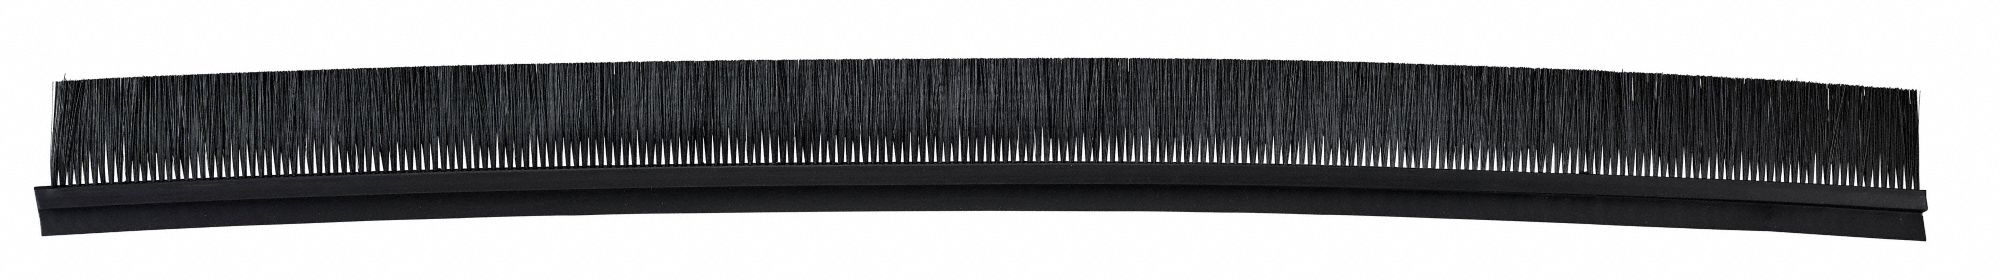 FPVC142036 Stapled Strip Brush with Flexible PVC, H-Shaped Profile, Black  Nylon Bristles, 3' Overall Length, 2 Trim Length, 3 Overall Height